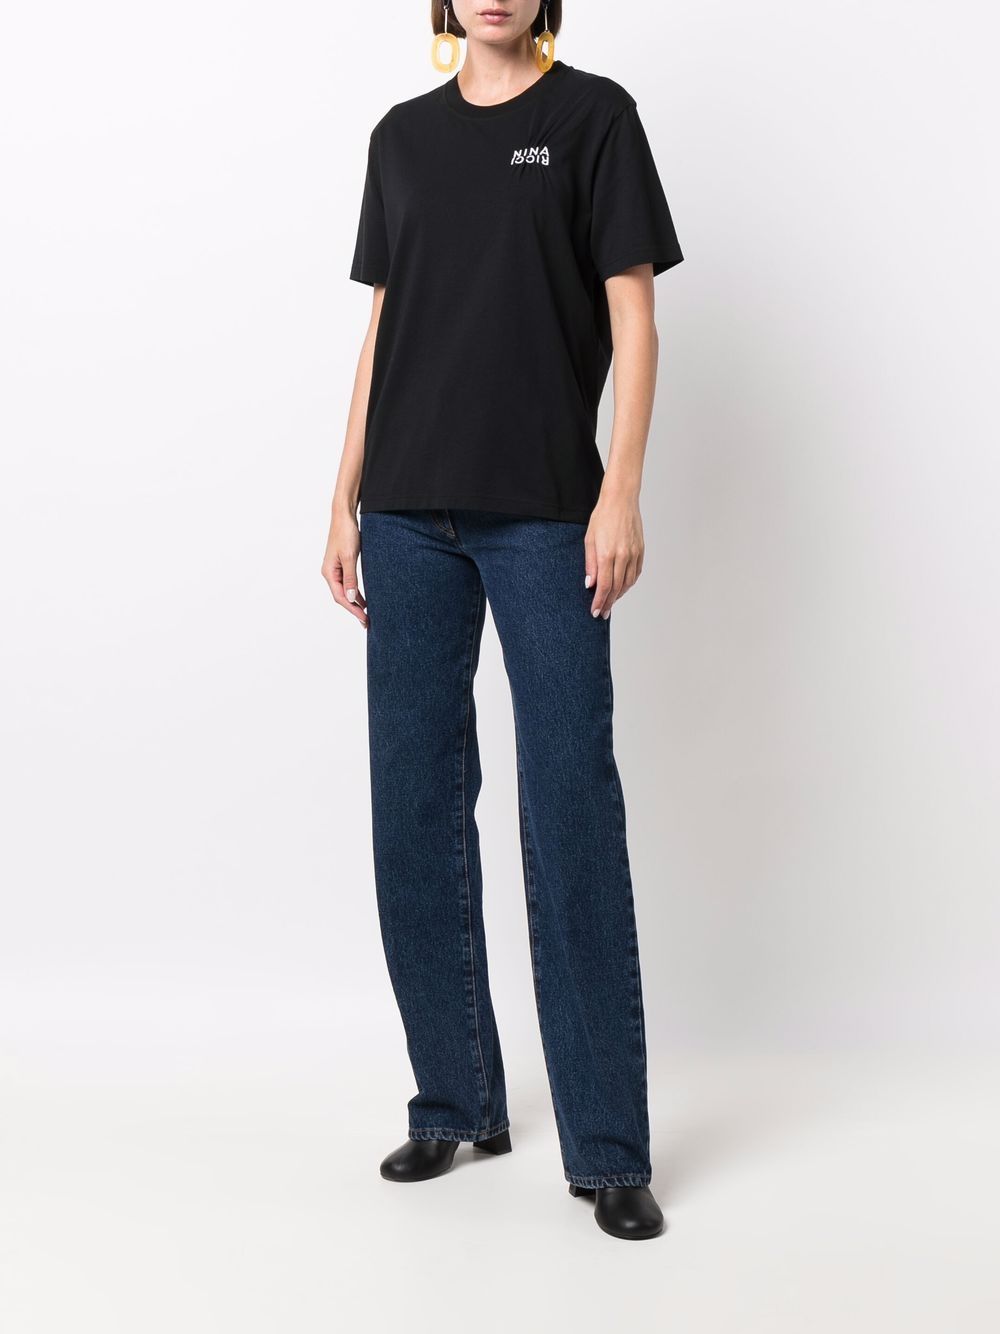 Nina Ricci T-shirt van katoen-jersey - Zwart